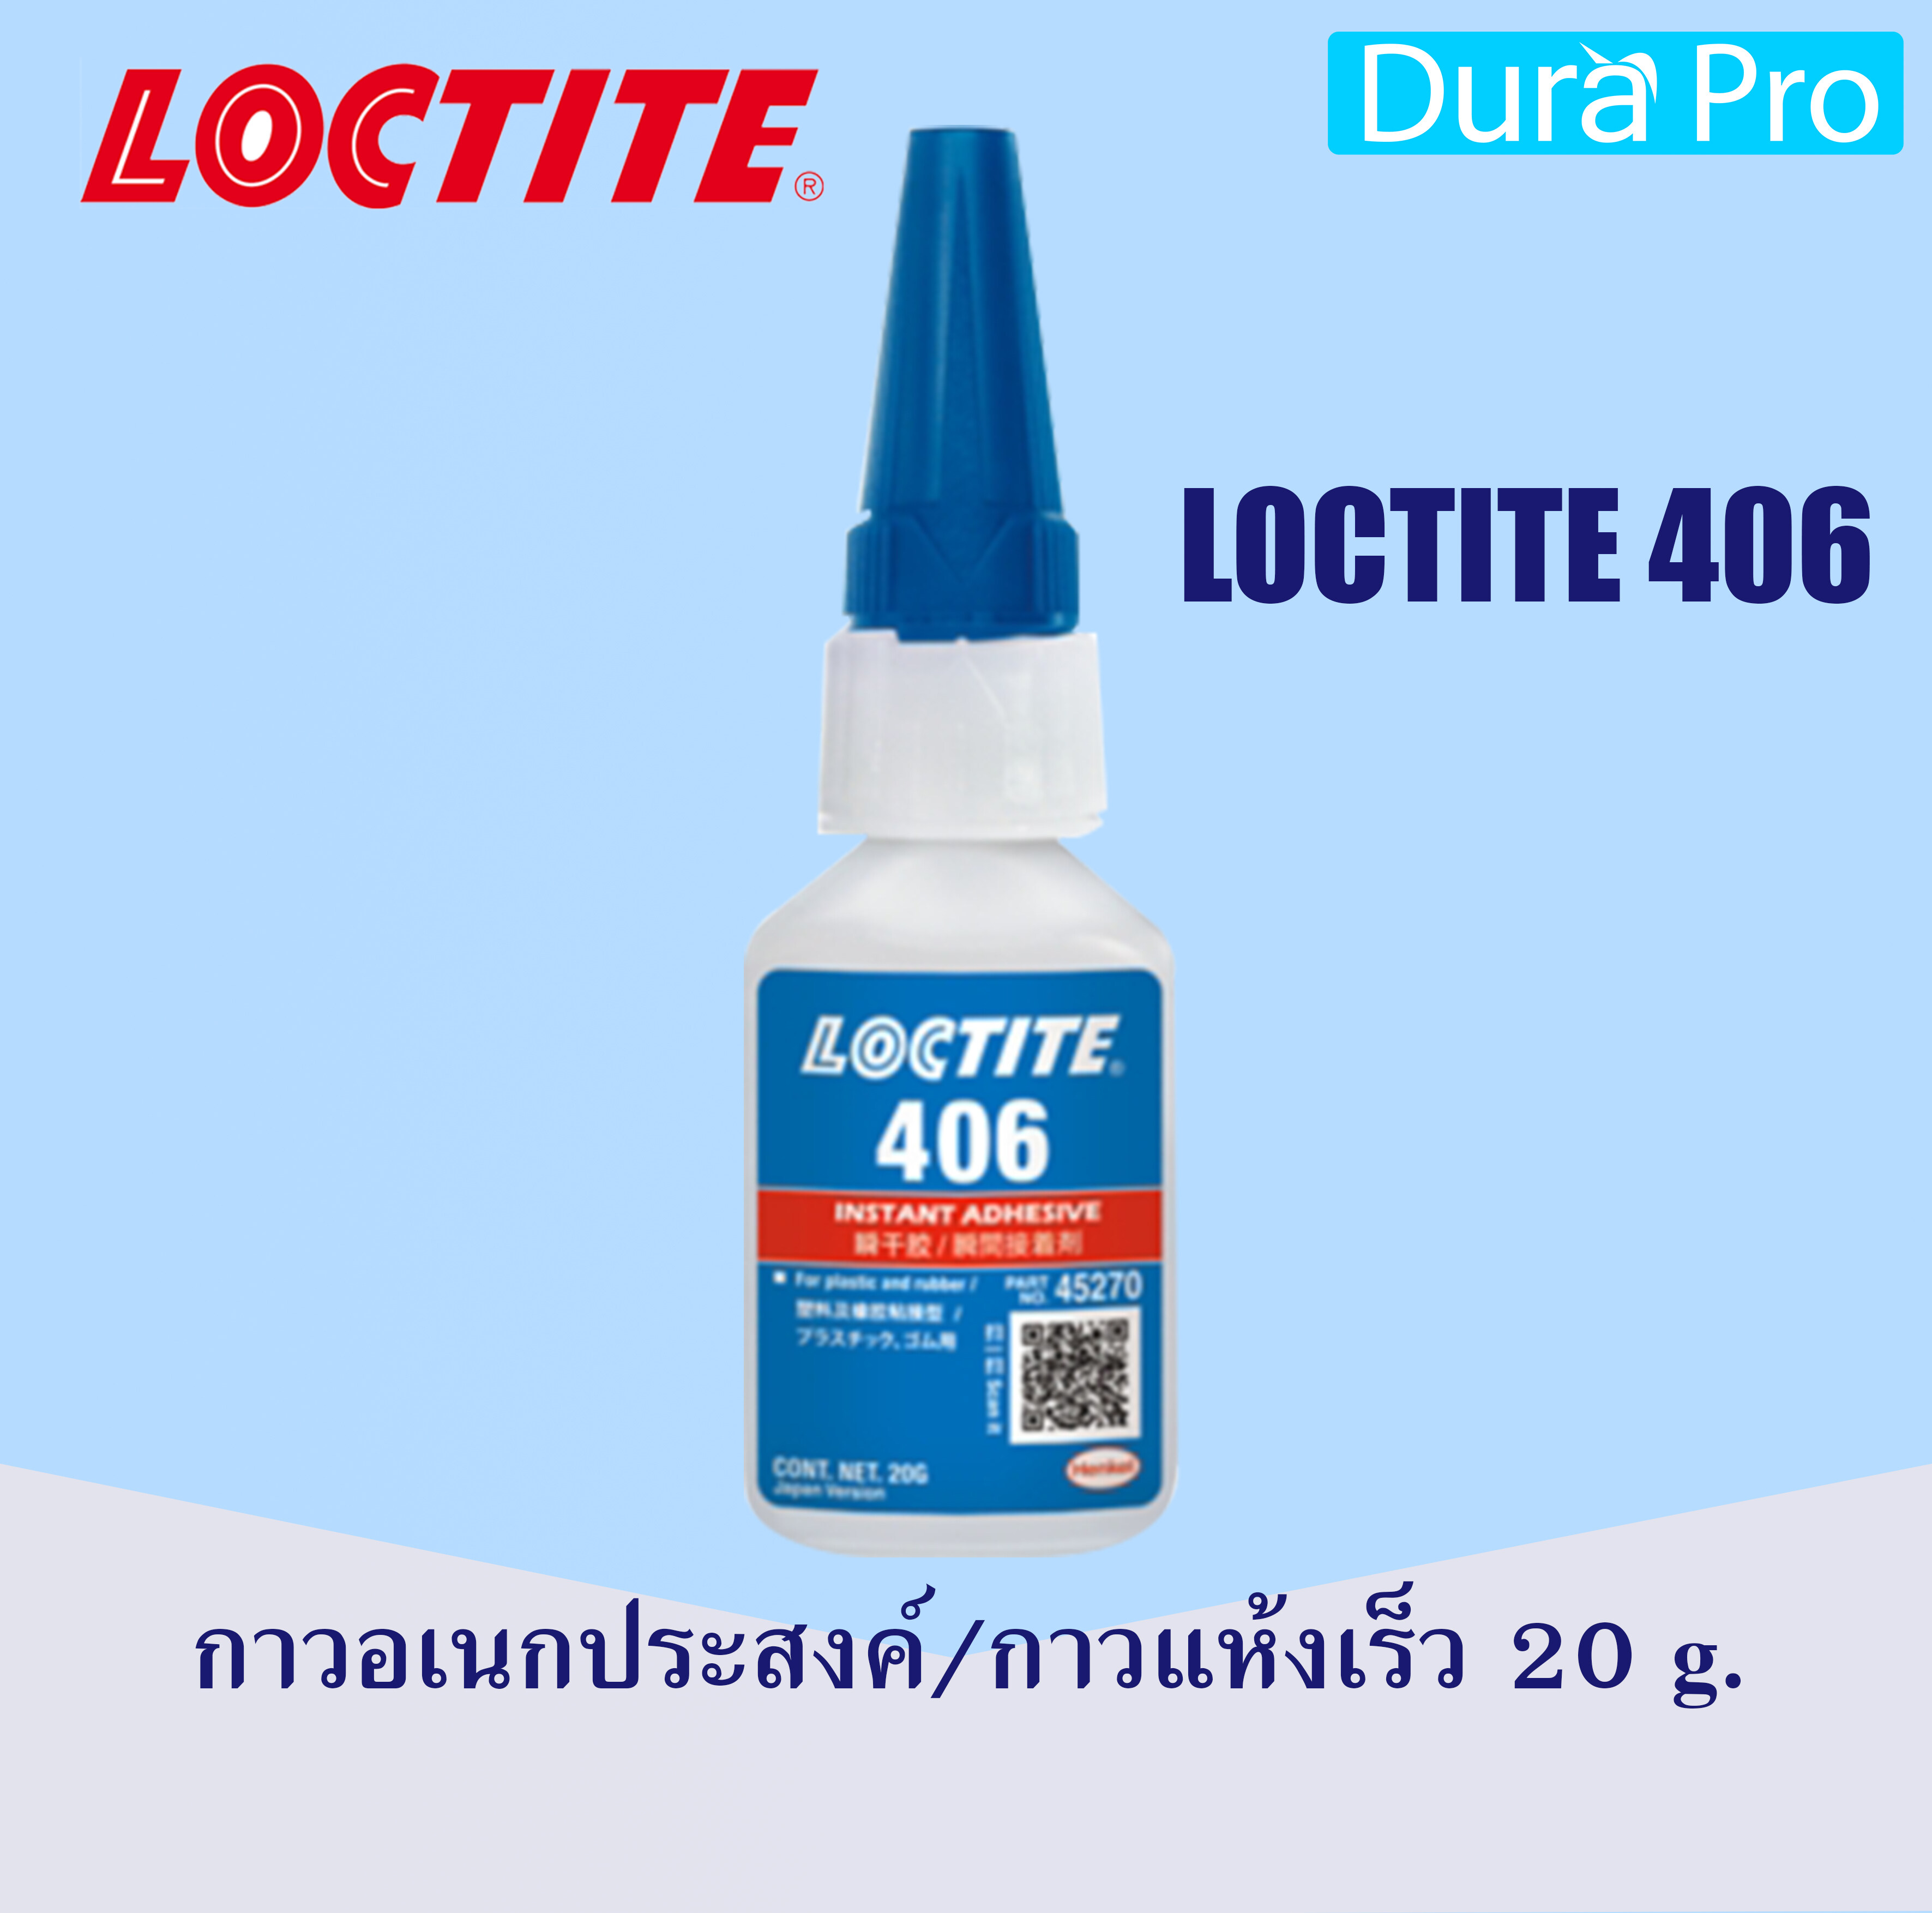 LOCTITE 406 Instant Adhesive ( ล็อคไทท์ ) กาวอเนกประสงค์/กาวแห้งเร็ว 20 g จัดจำหน่ายโดย Dura Pro